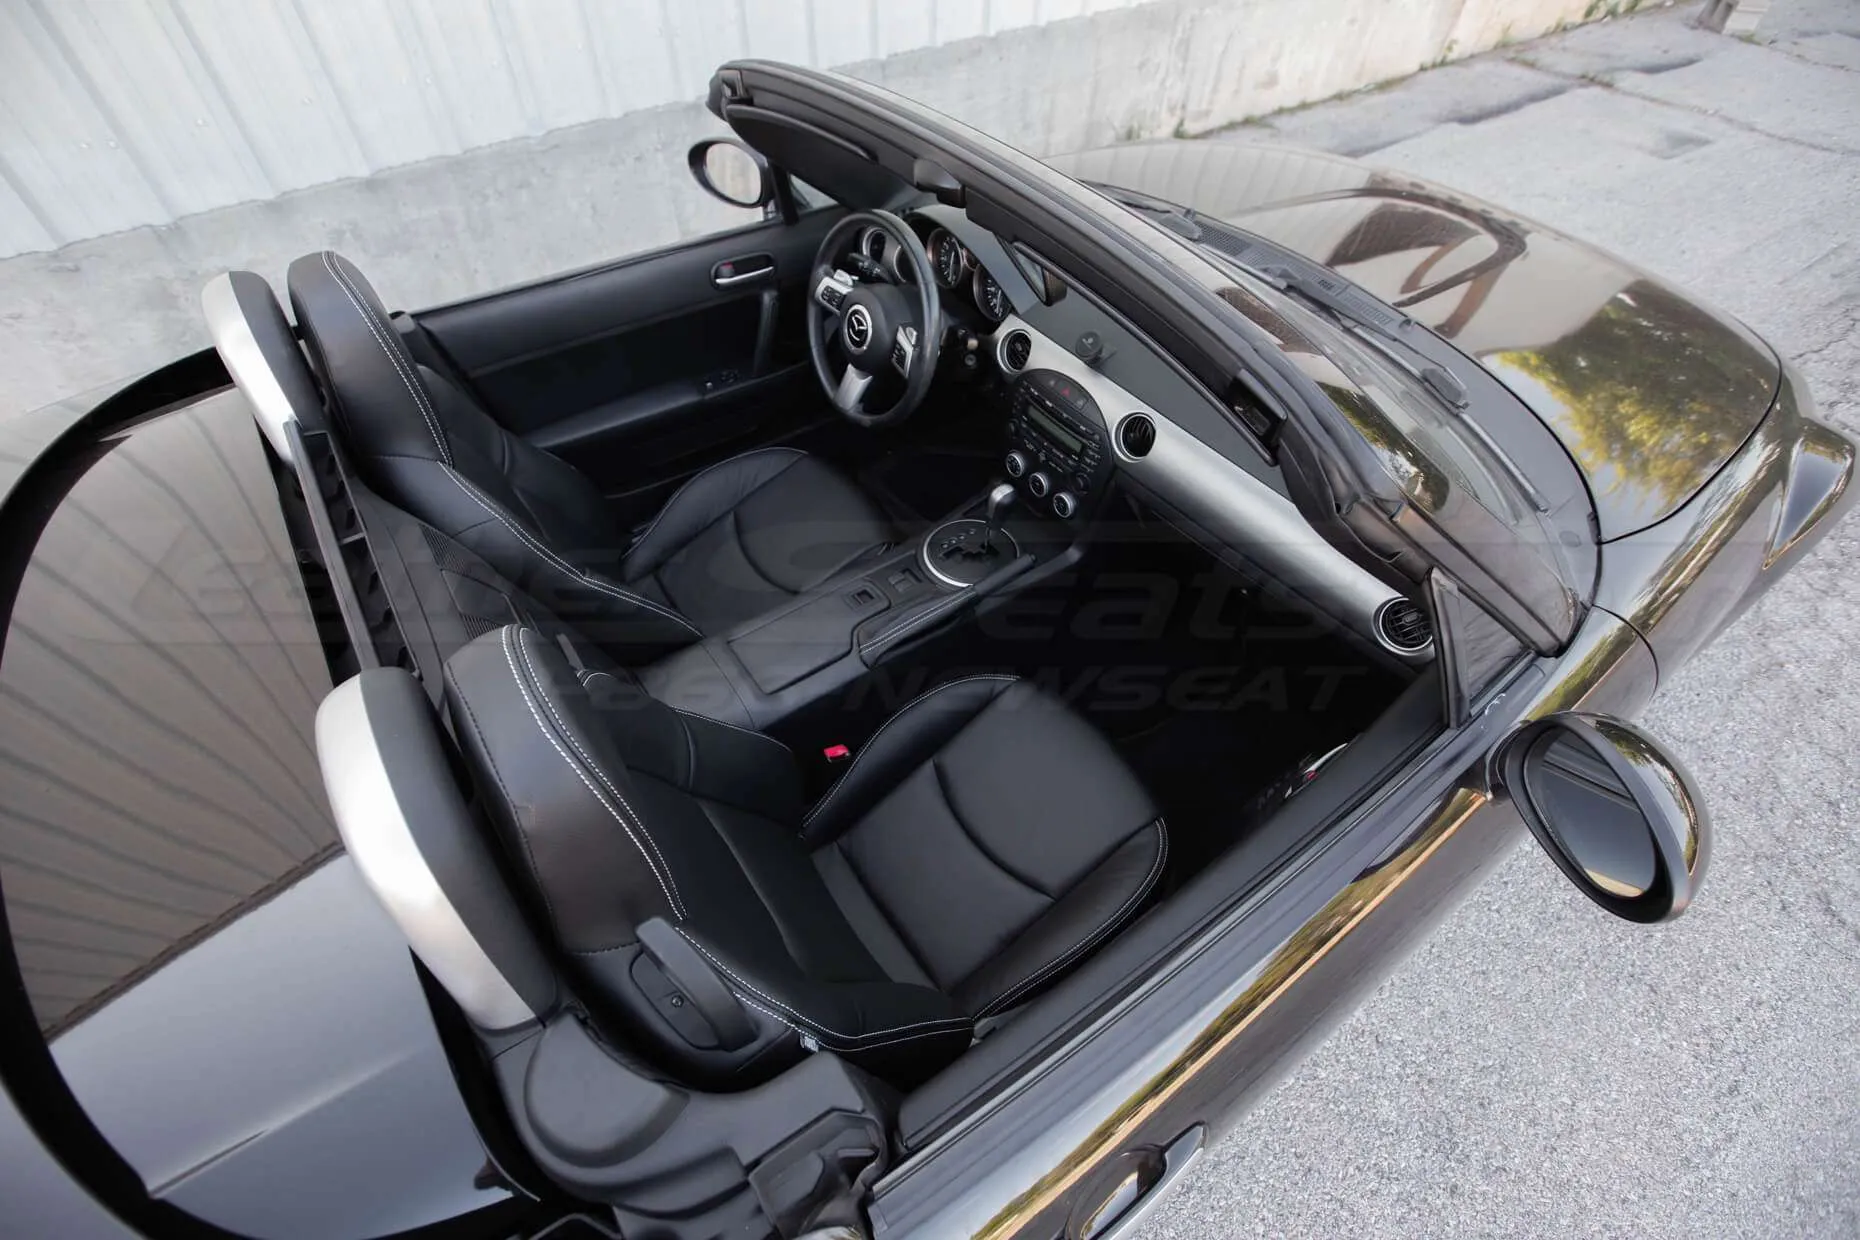 Mazda Mazda Miata Installed Leather Seats- Black - Leather interior overhead